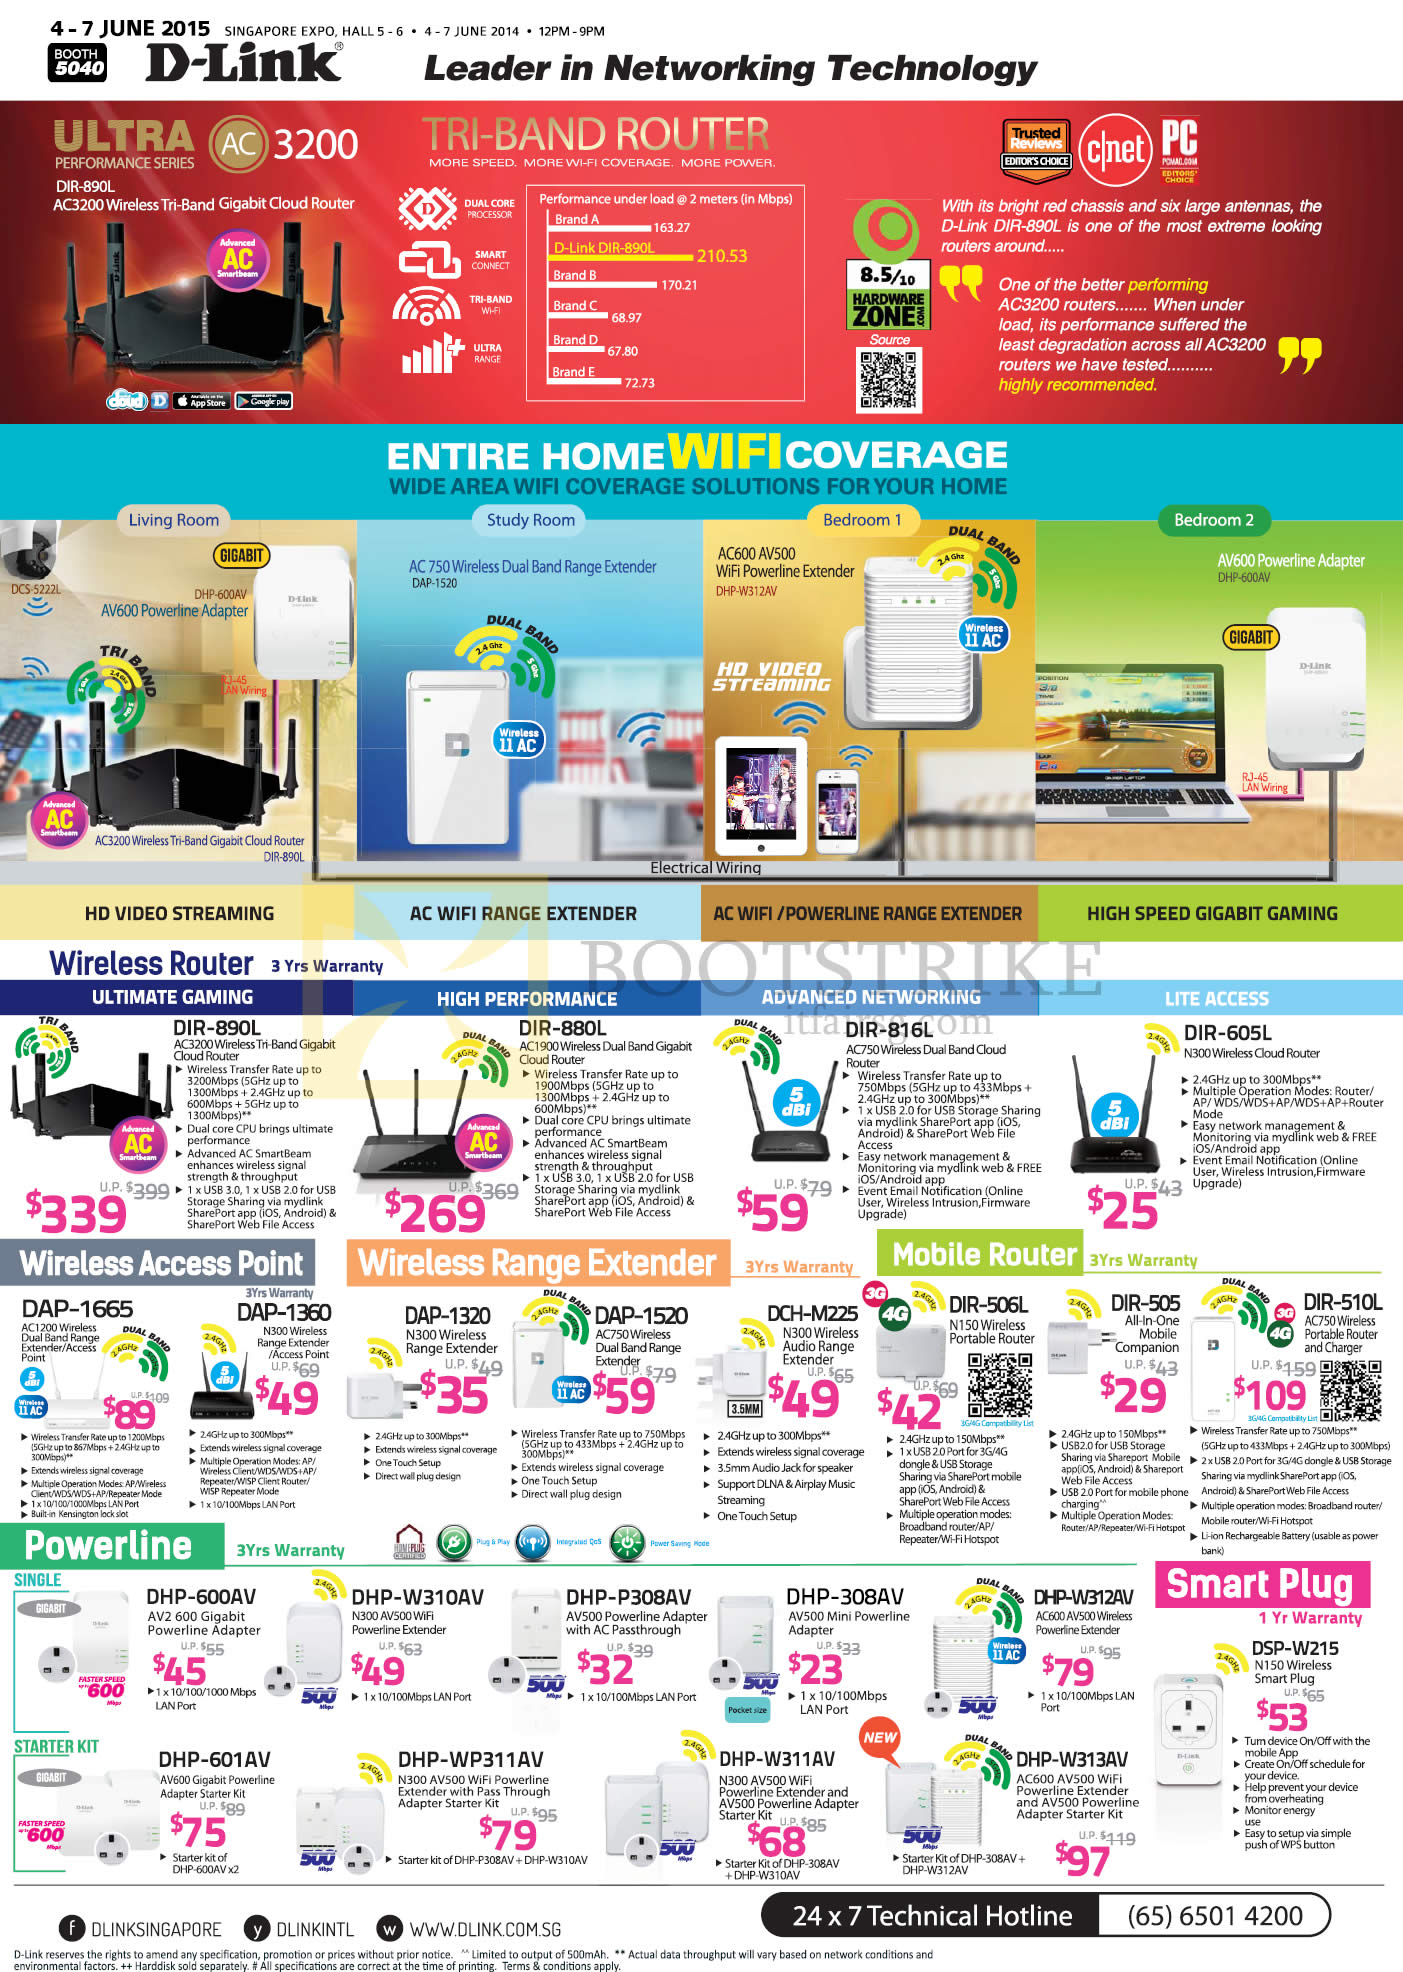 PC SHOW 2015 price list image brochure of D-Link Networking Router, Access Point, Range Extender, Powerline, Smart Plug, DIR DAP DHP DSP